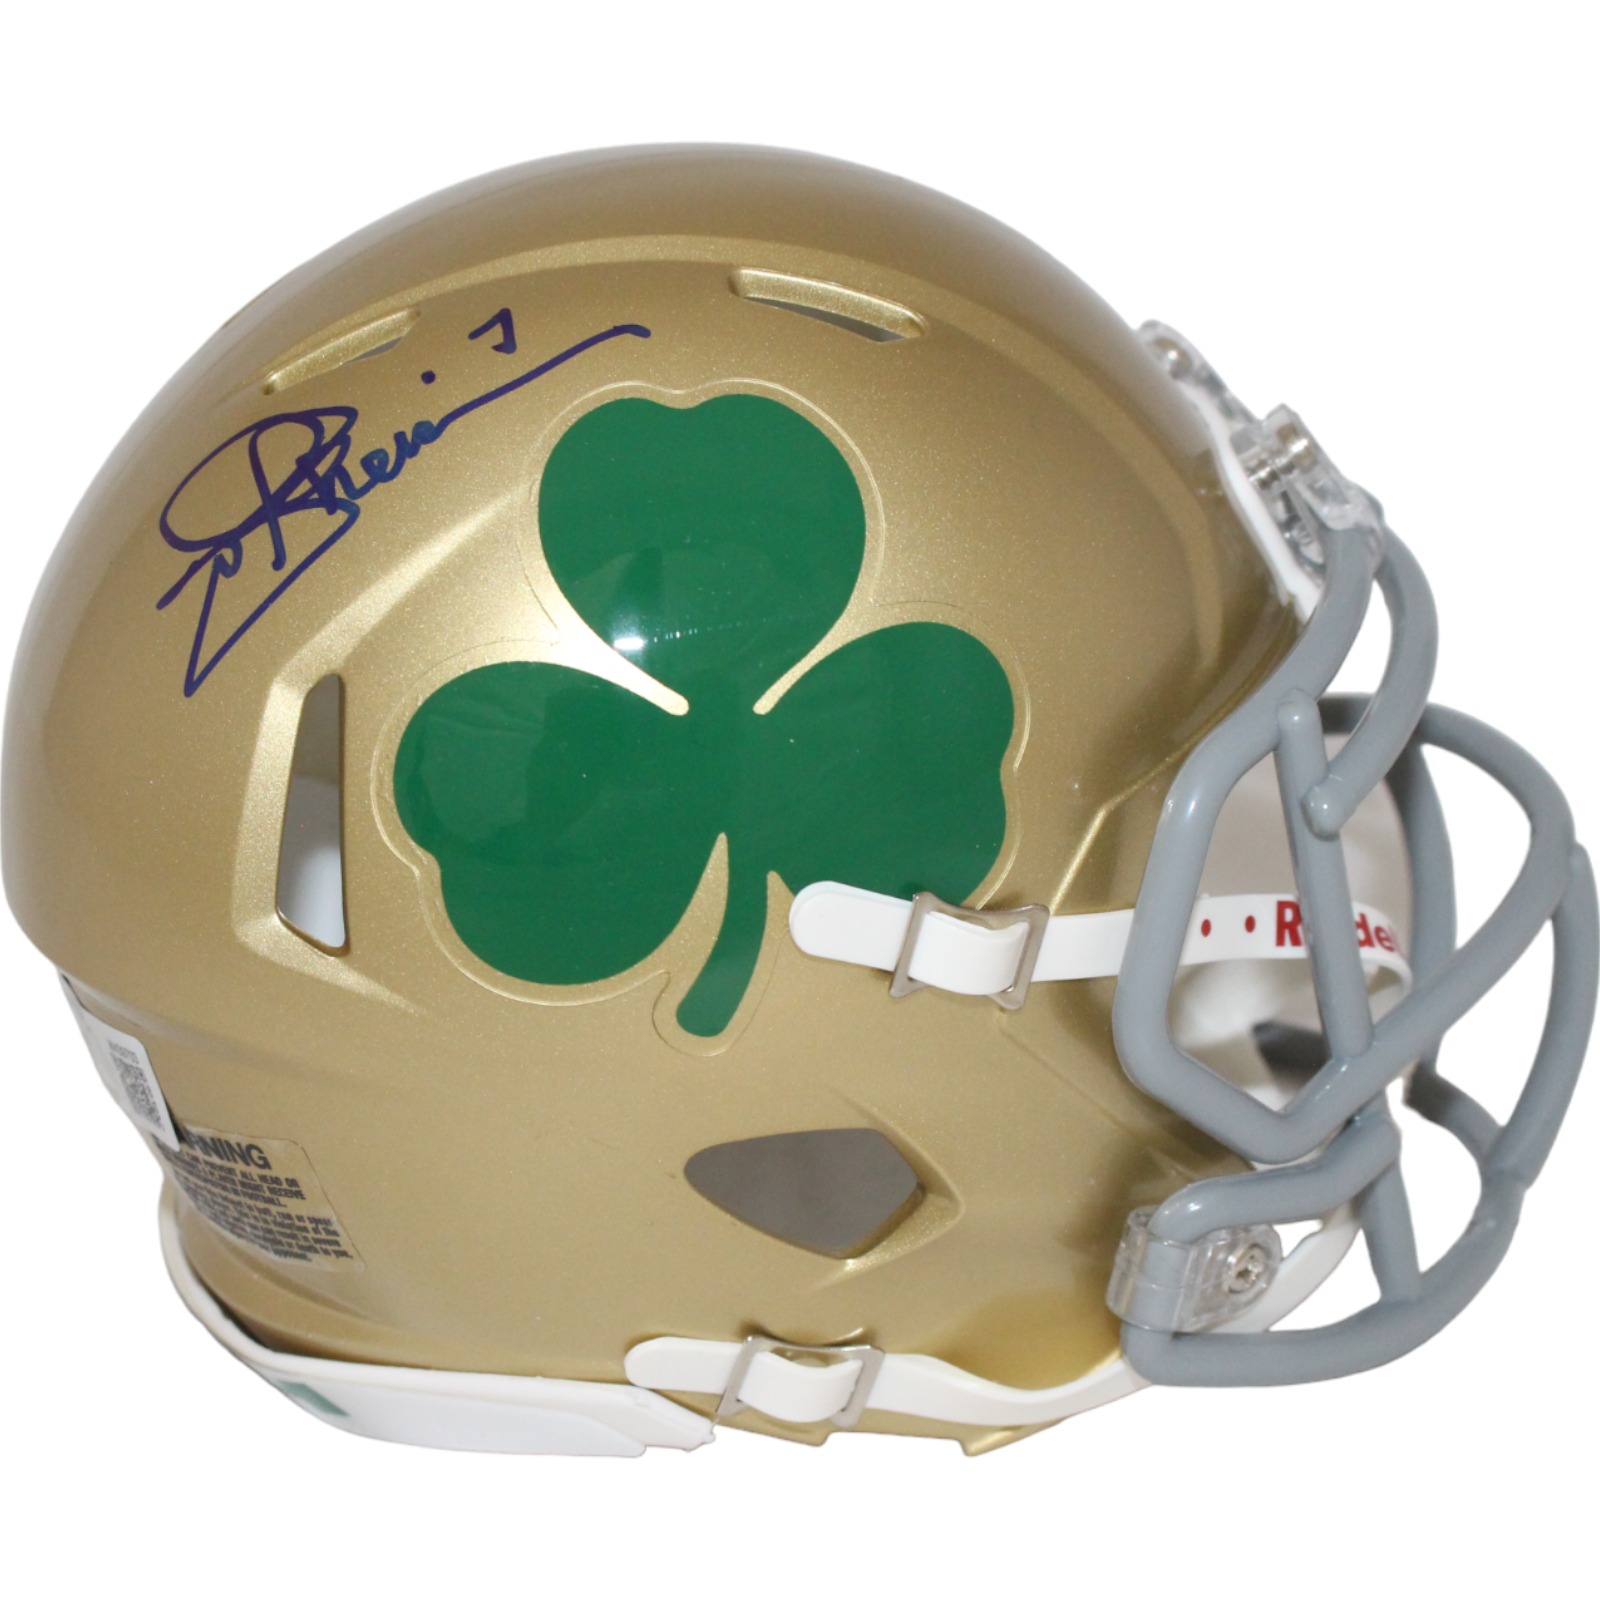 Joe Theismann Signed Notre Dame Fighting Irish Shamrock Mini Beckett